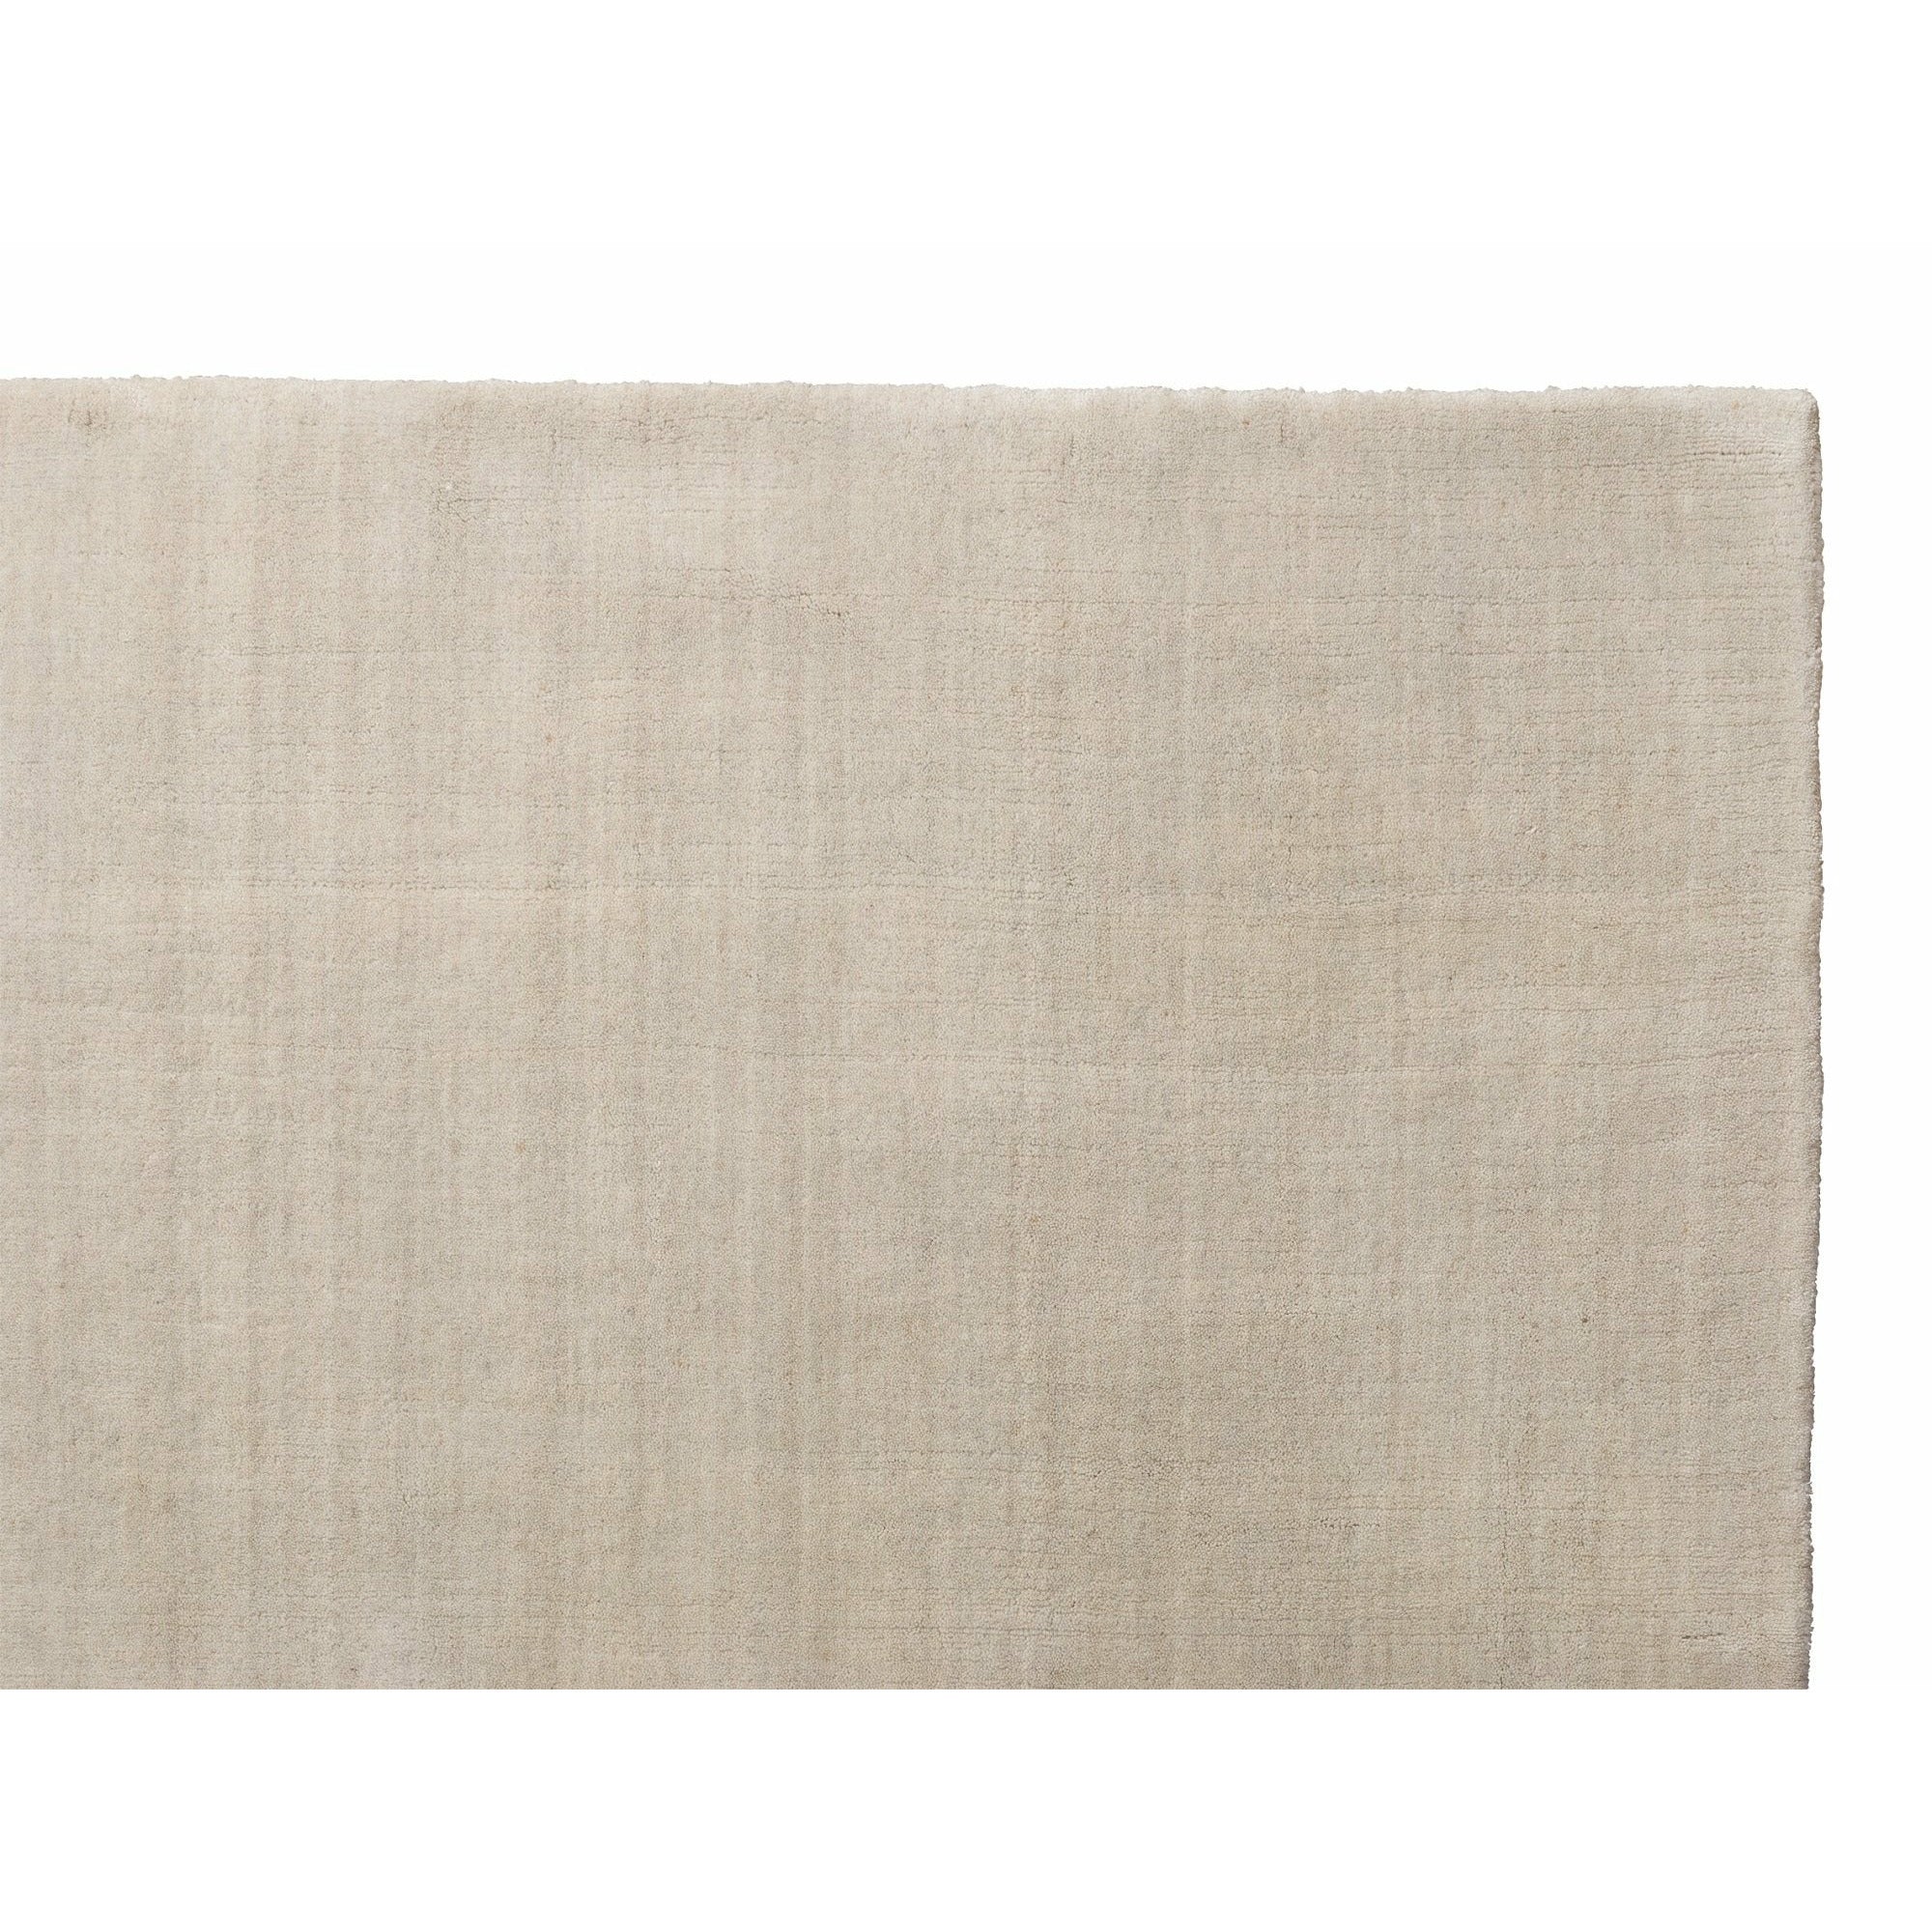 Massimo Earth Bamboo -matto pehmeä harmaa, 200x300 cm